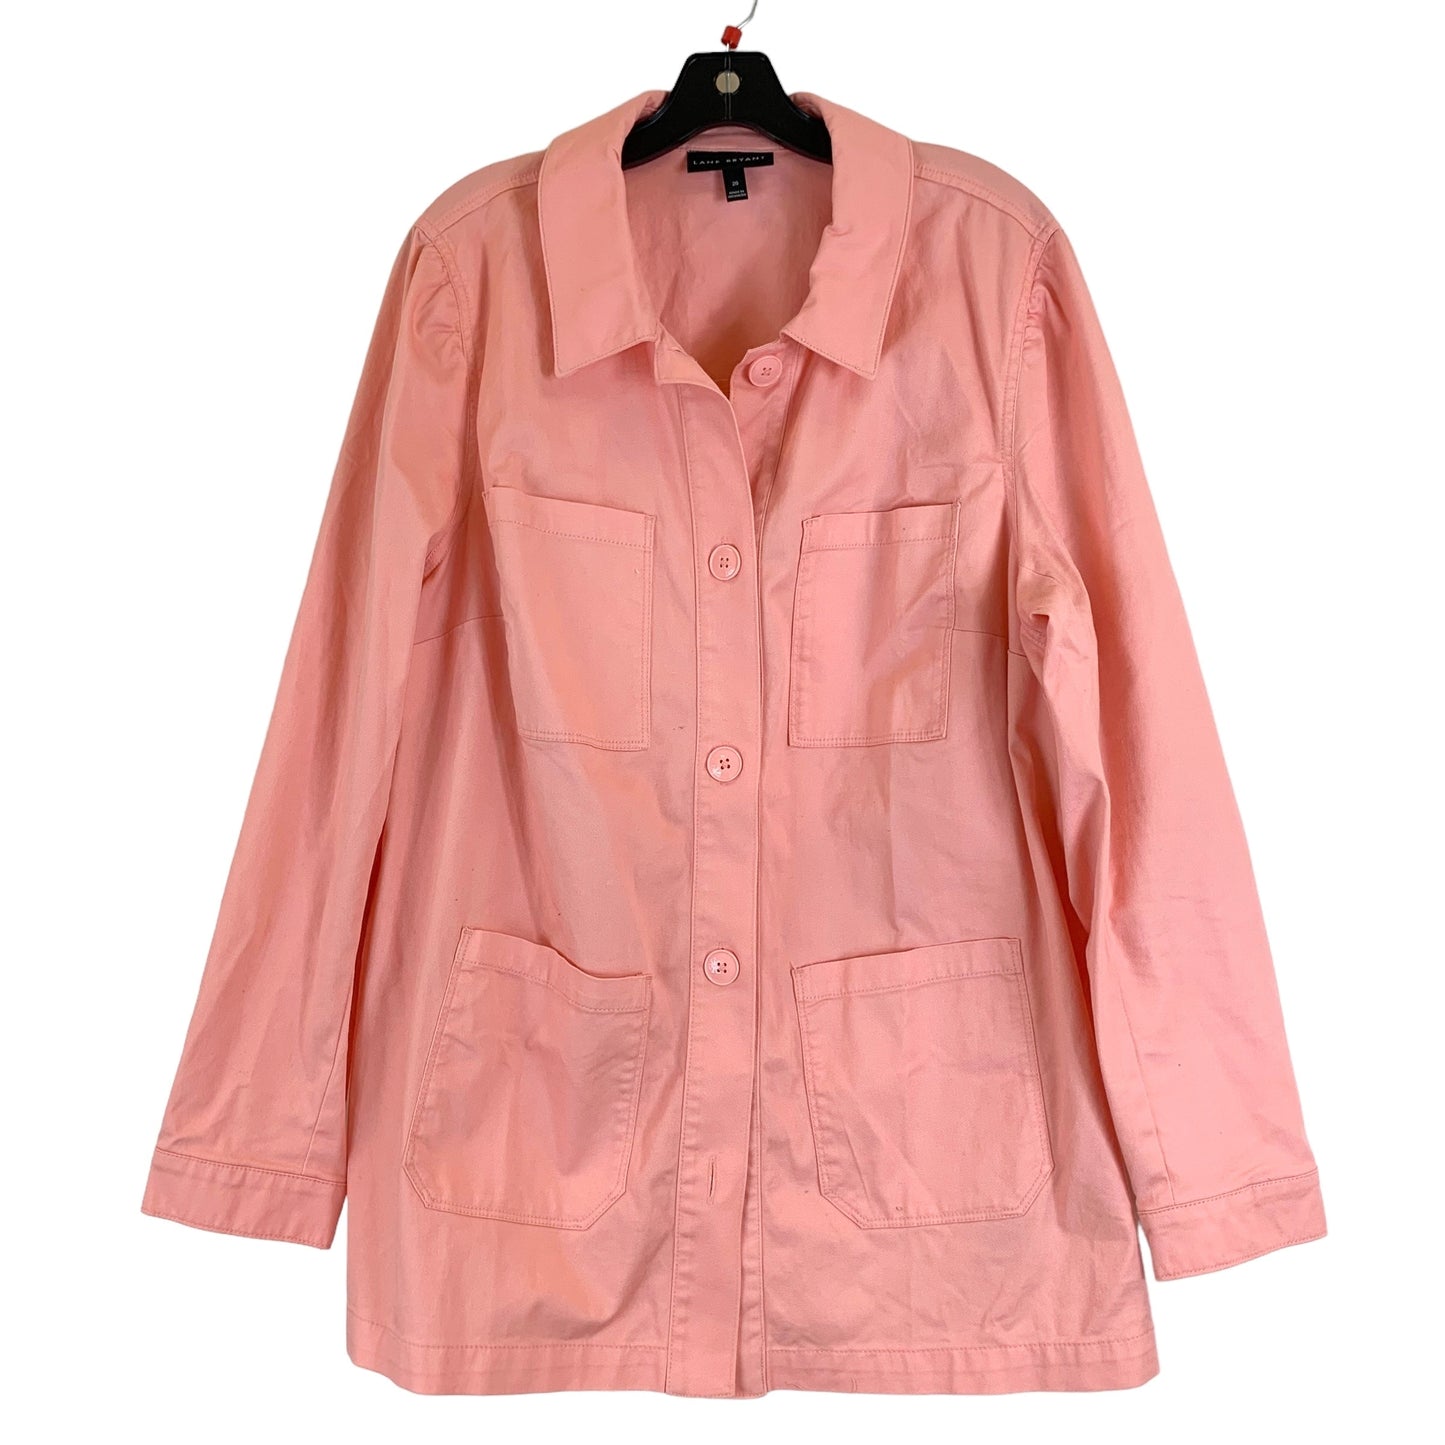 Peach Jacket Shirt Lane Bryant, Size 2x